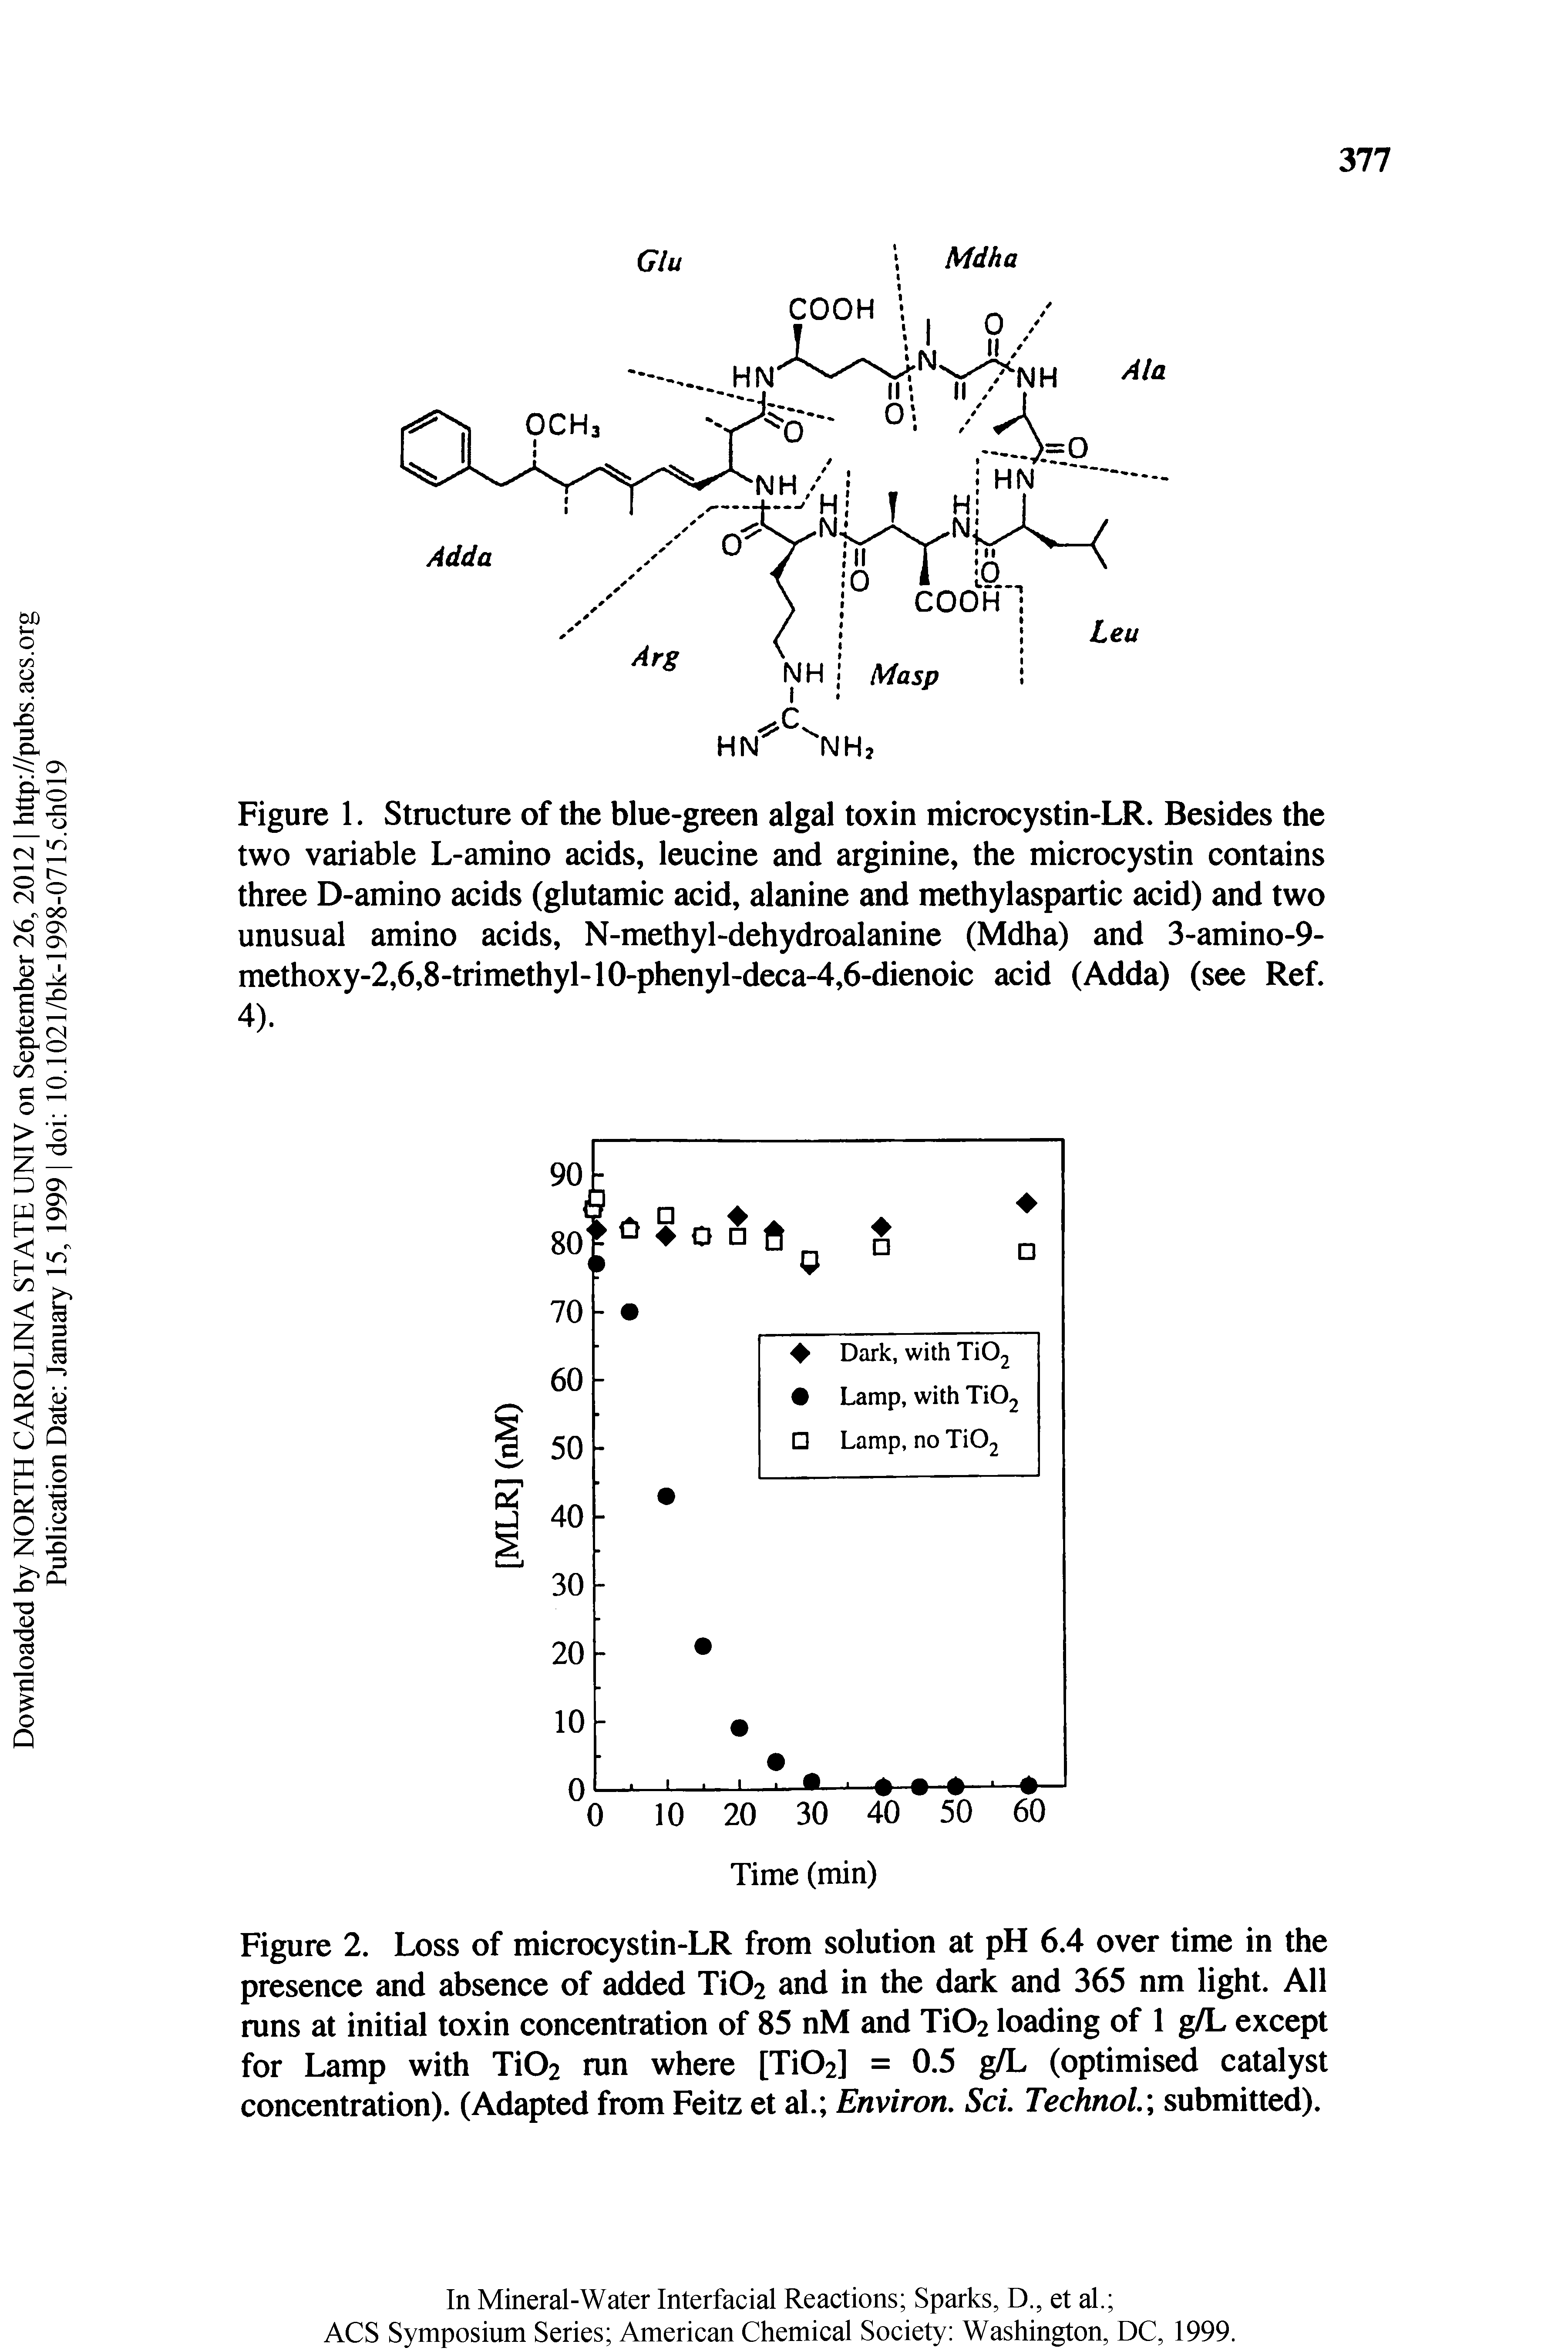 Figure 1. Structure of the blue-green algal toxin microcystin-LR. Besides the two variable L-amino acids, leucine and arginine, the microcystin contains three D-amino acids (glutamic acid, alanine and methylaspartic acid) and two unusual amino acids, N-methyl-dehydroalanine (Mdha) and 3-amino-9-methoxy-2,6,8-trimethyl-10-phenyl-deca-4,6-dienoic acid (Adda) (see Ref. 4).